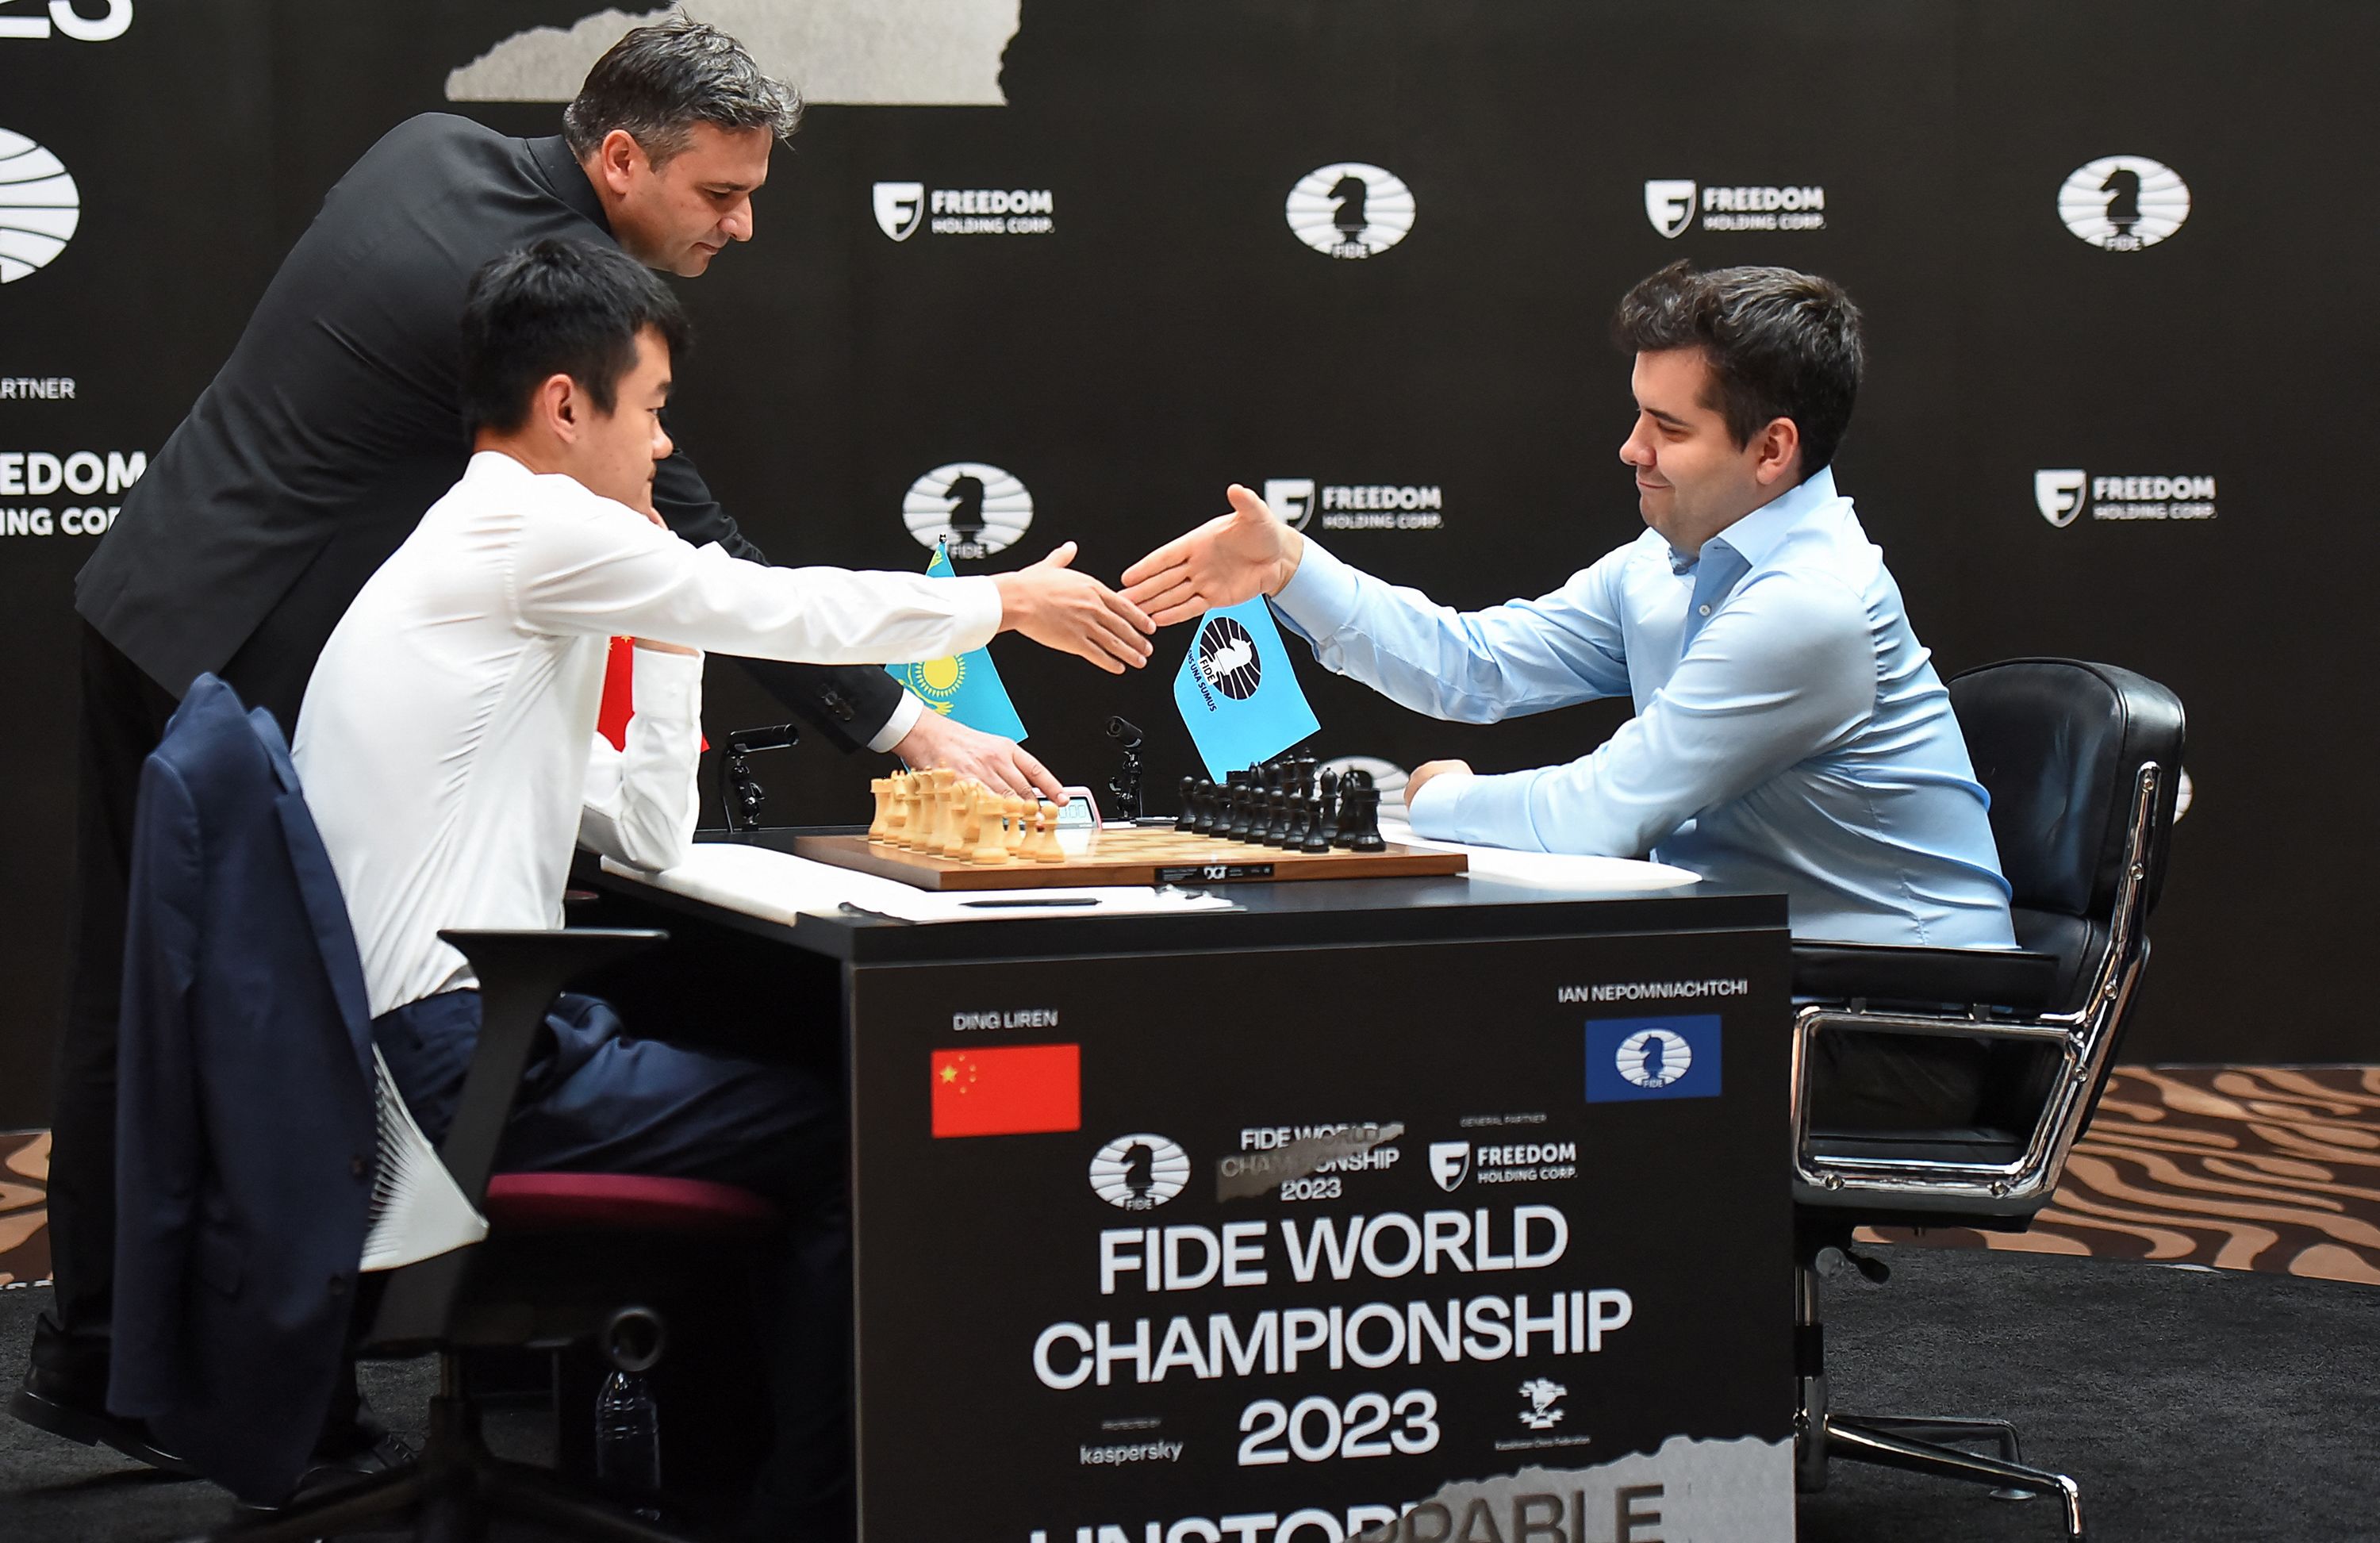 FIDE World Chess Championship 2023